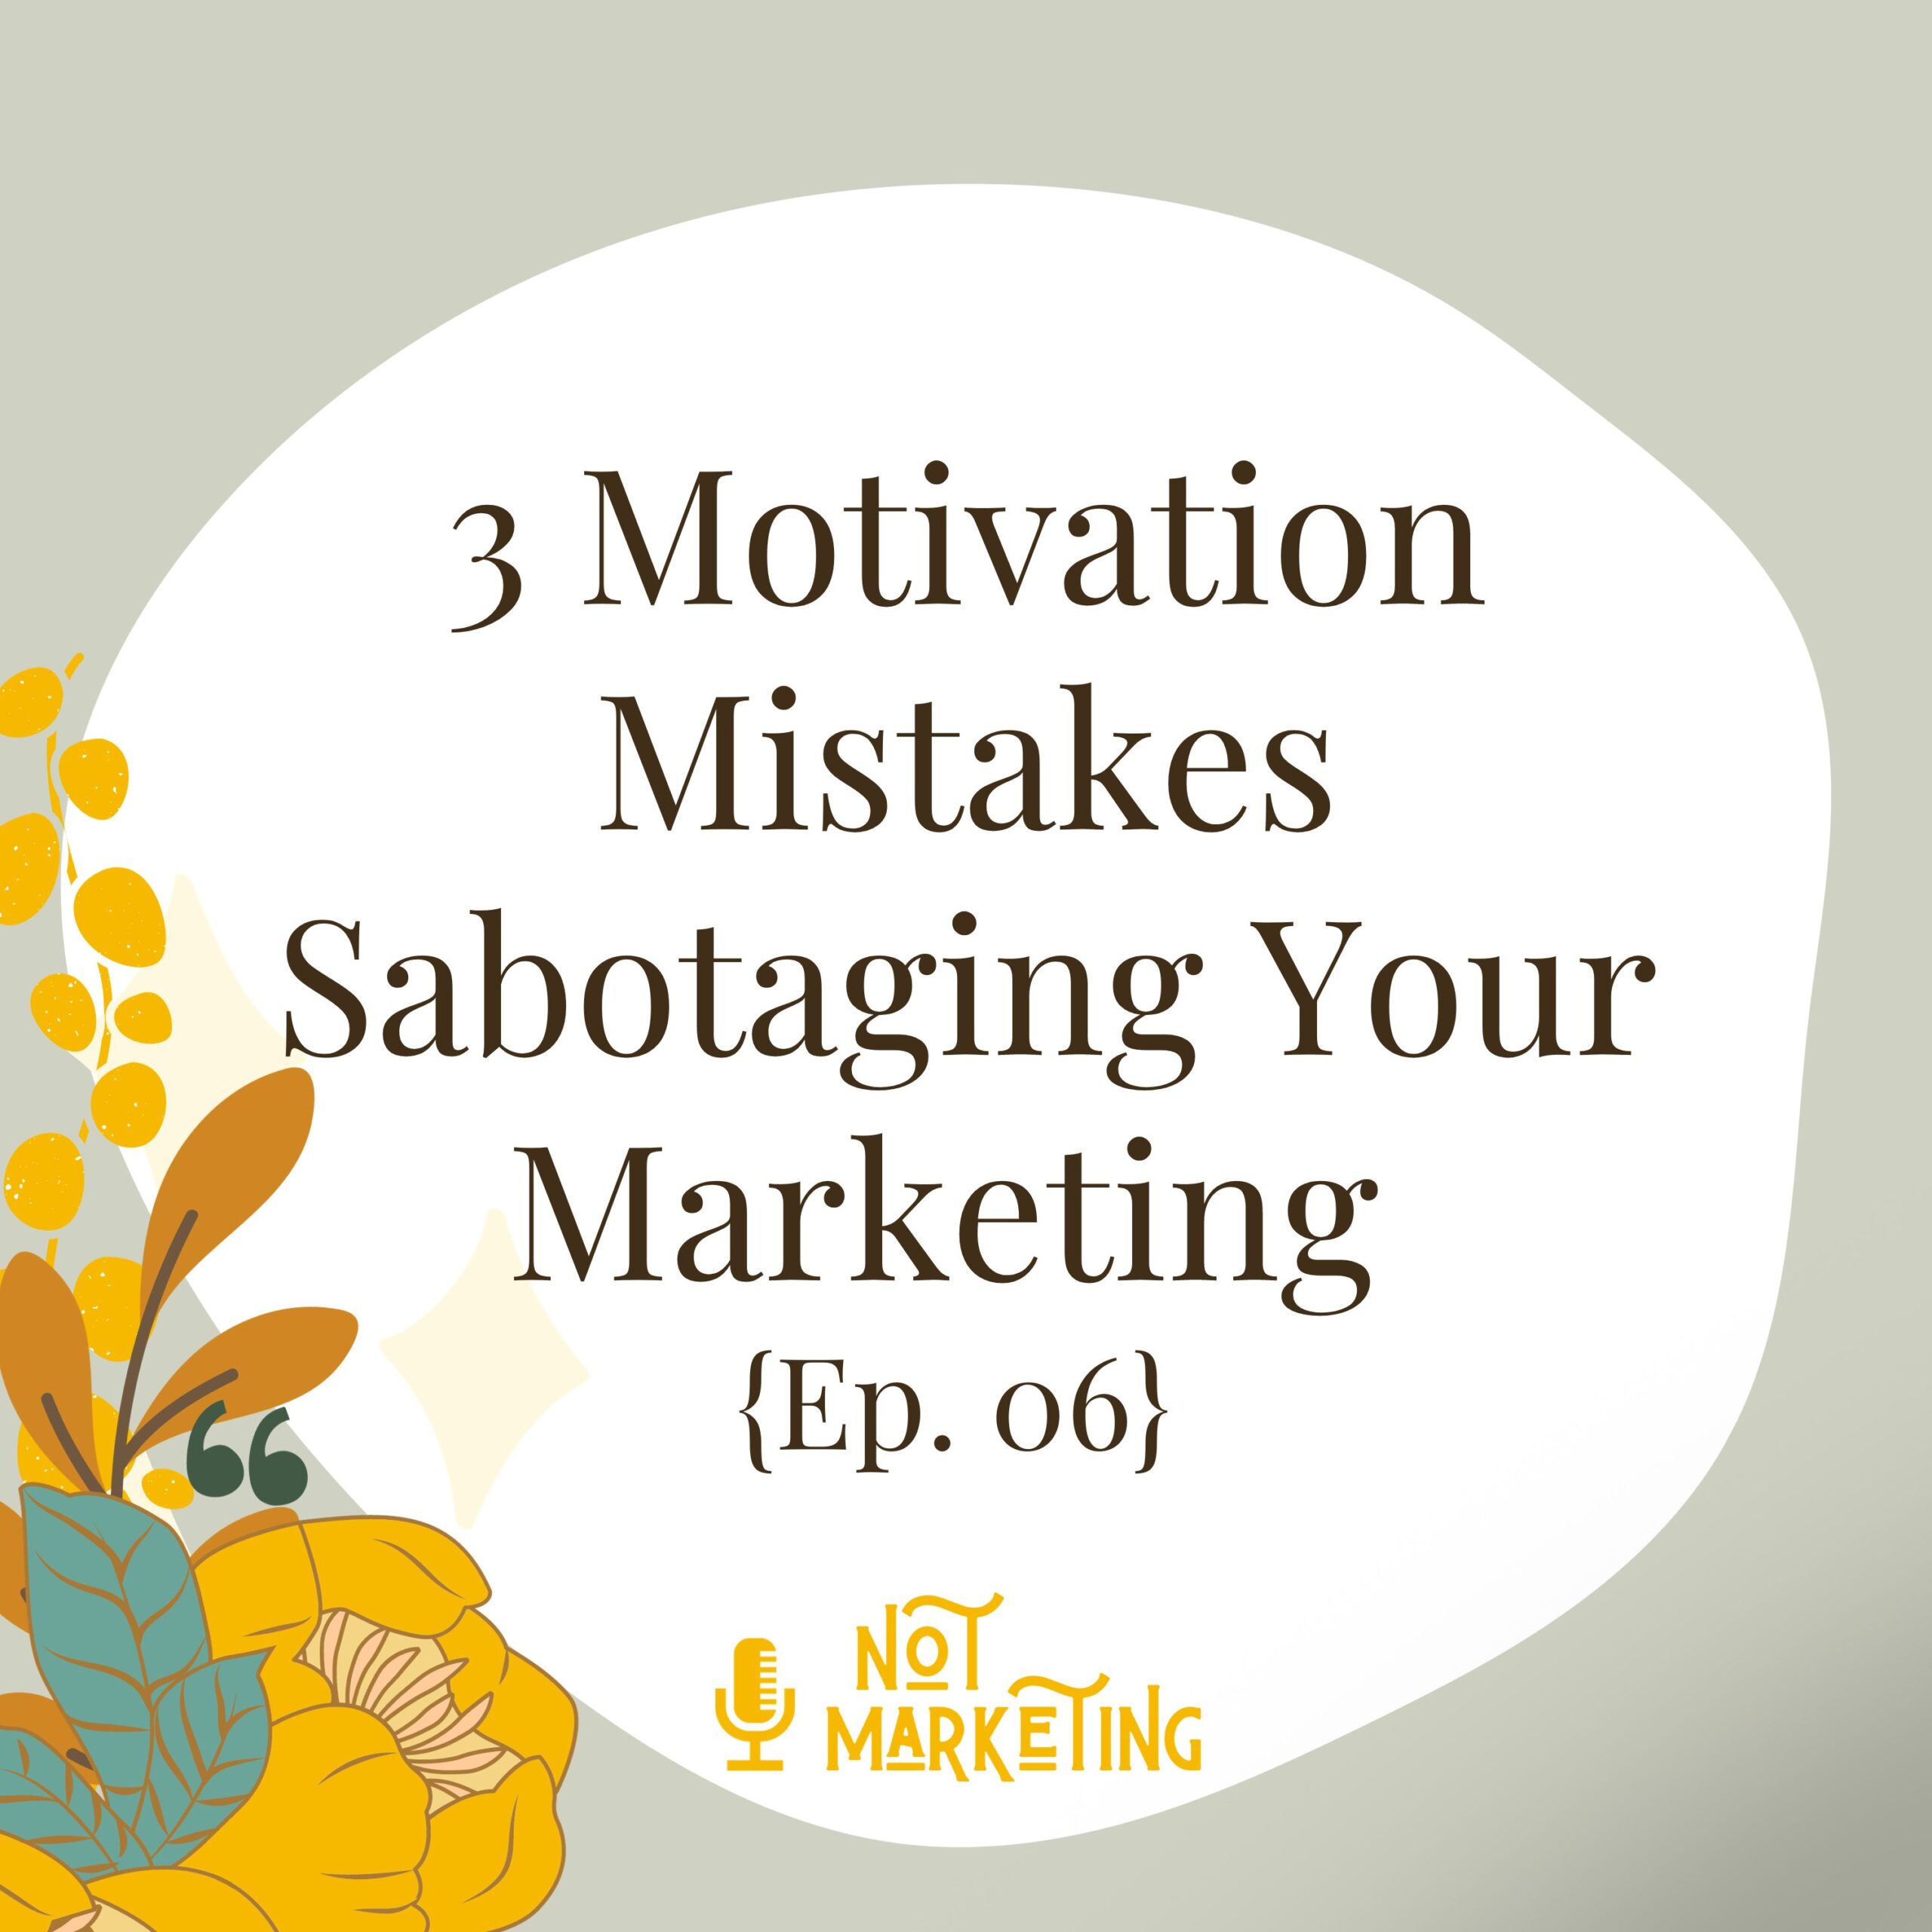 3 Motivation Mistakes Sabotaging Your Marketing Ep.06